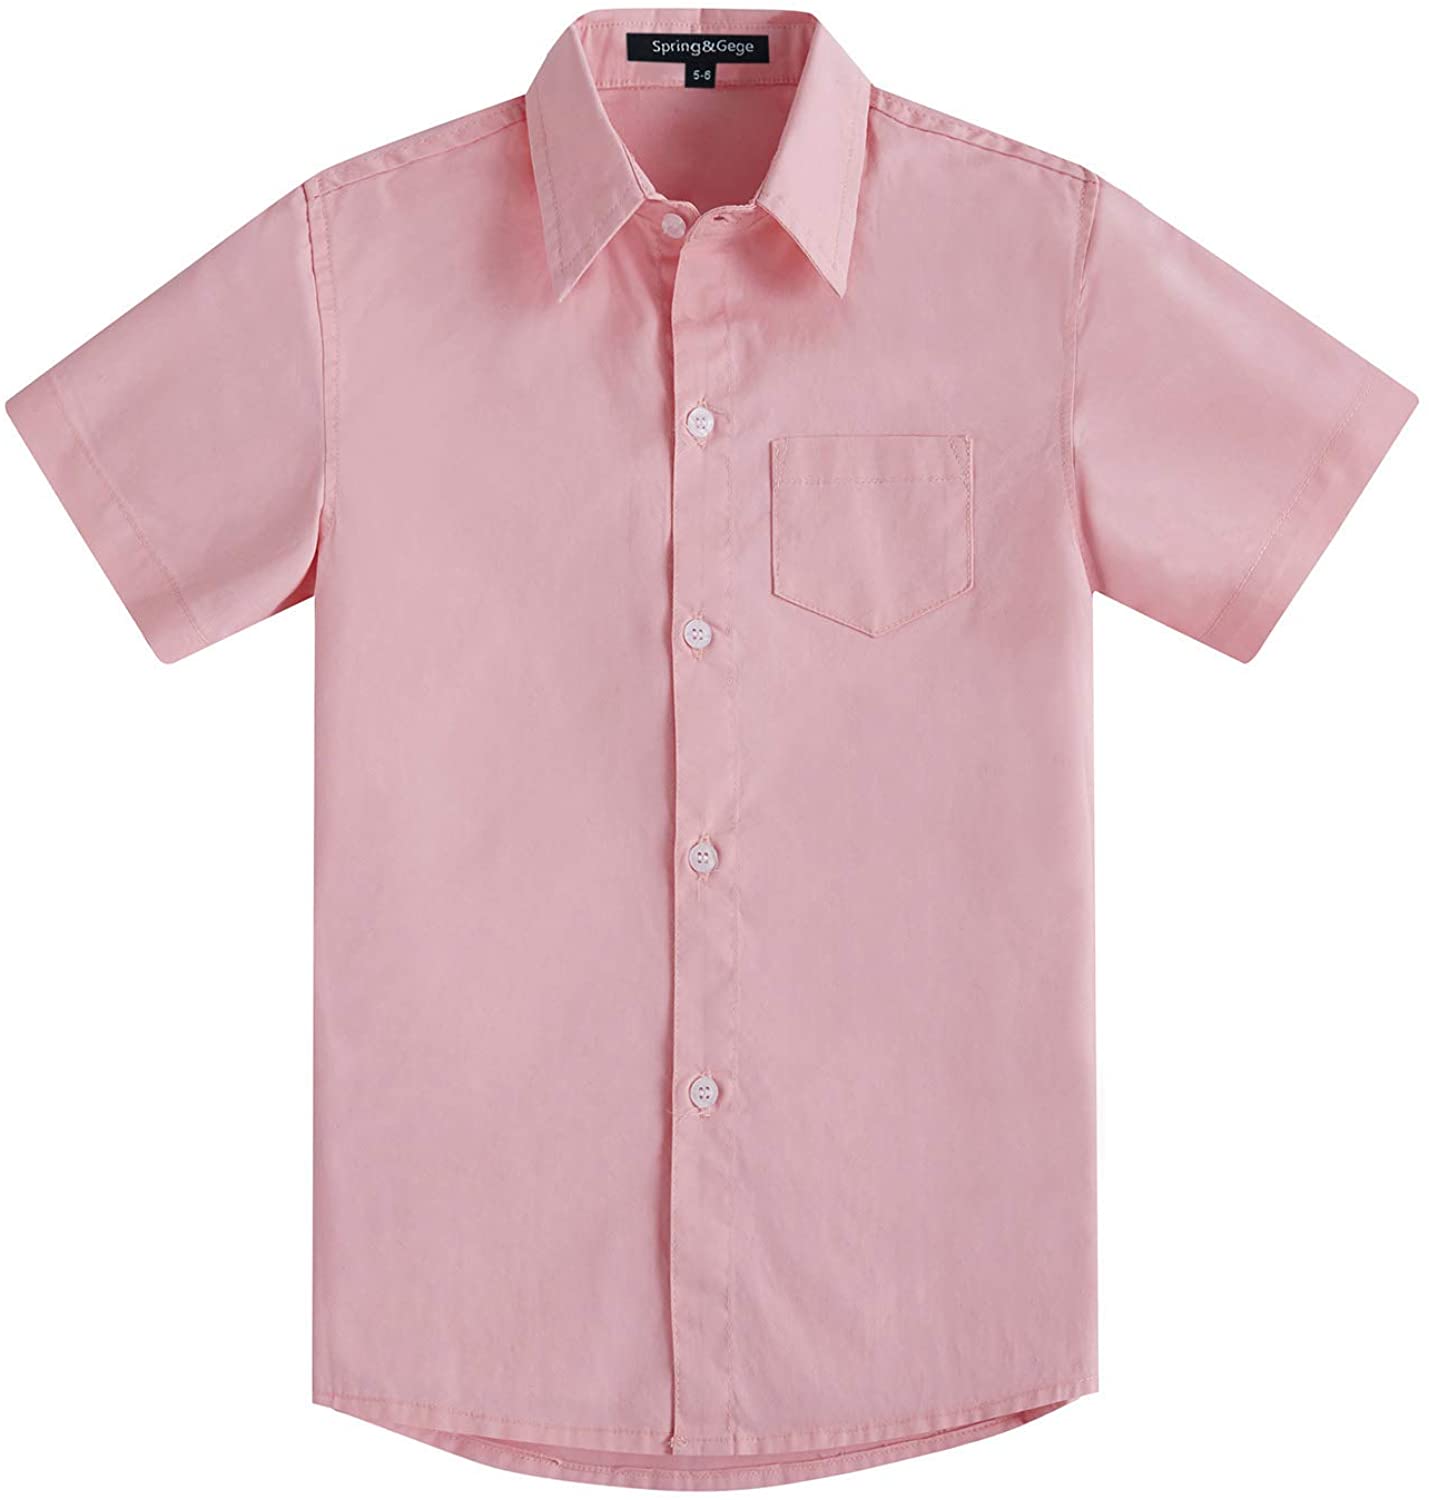 Spring&Gege Boys' Long Sleeve Uniform Oxford Shirt Cotton Solid 